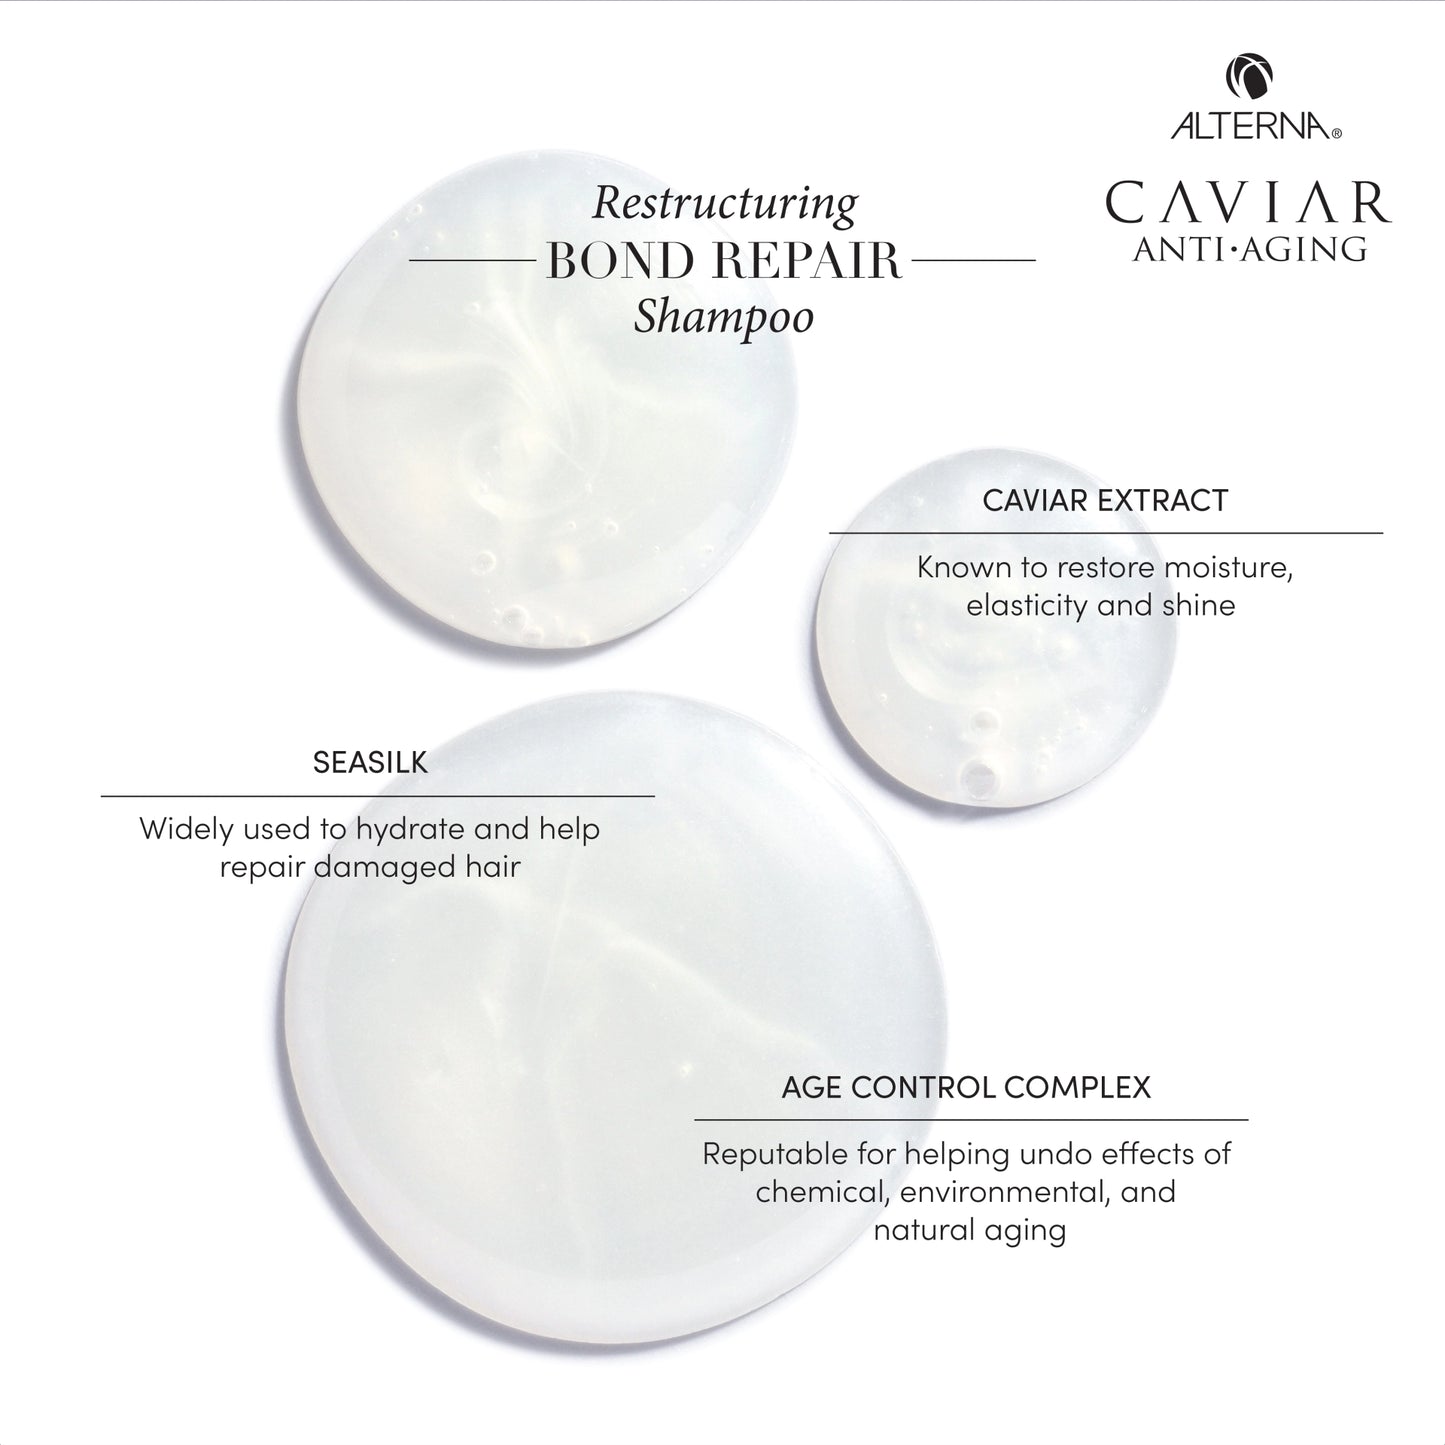 CAVIAR Anti-Aging Restructuring Bond Repair Shampoo 8.5oz